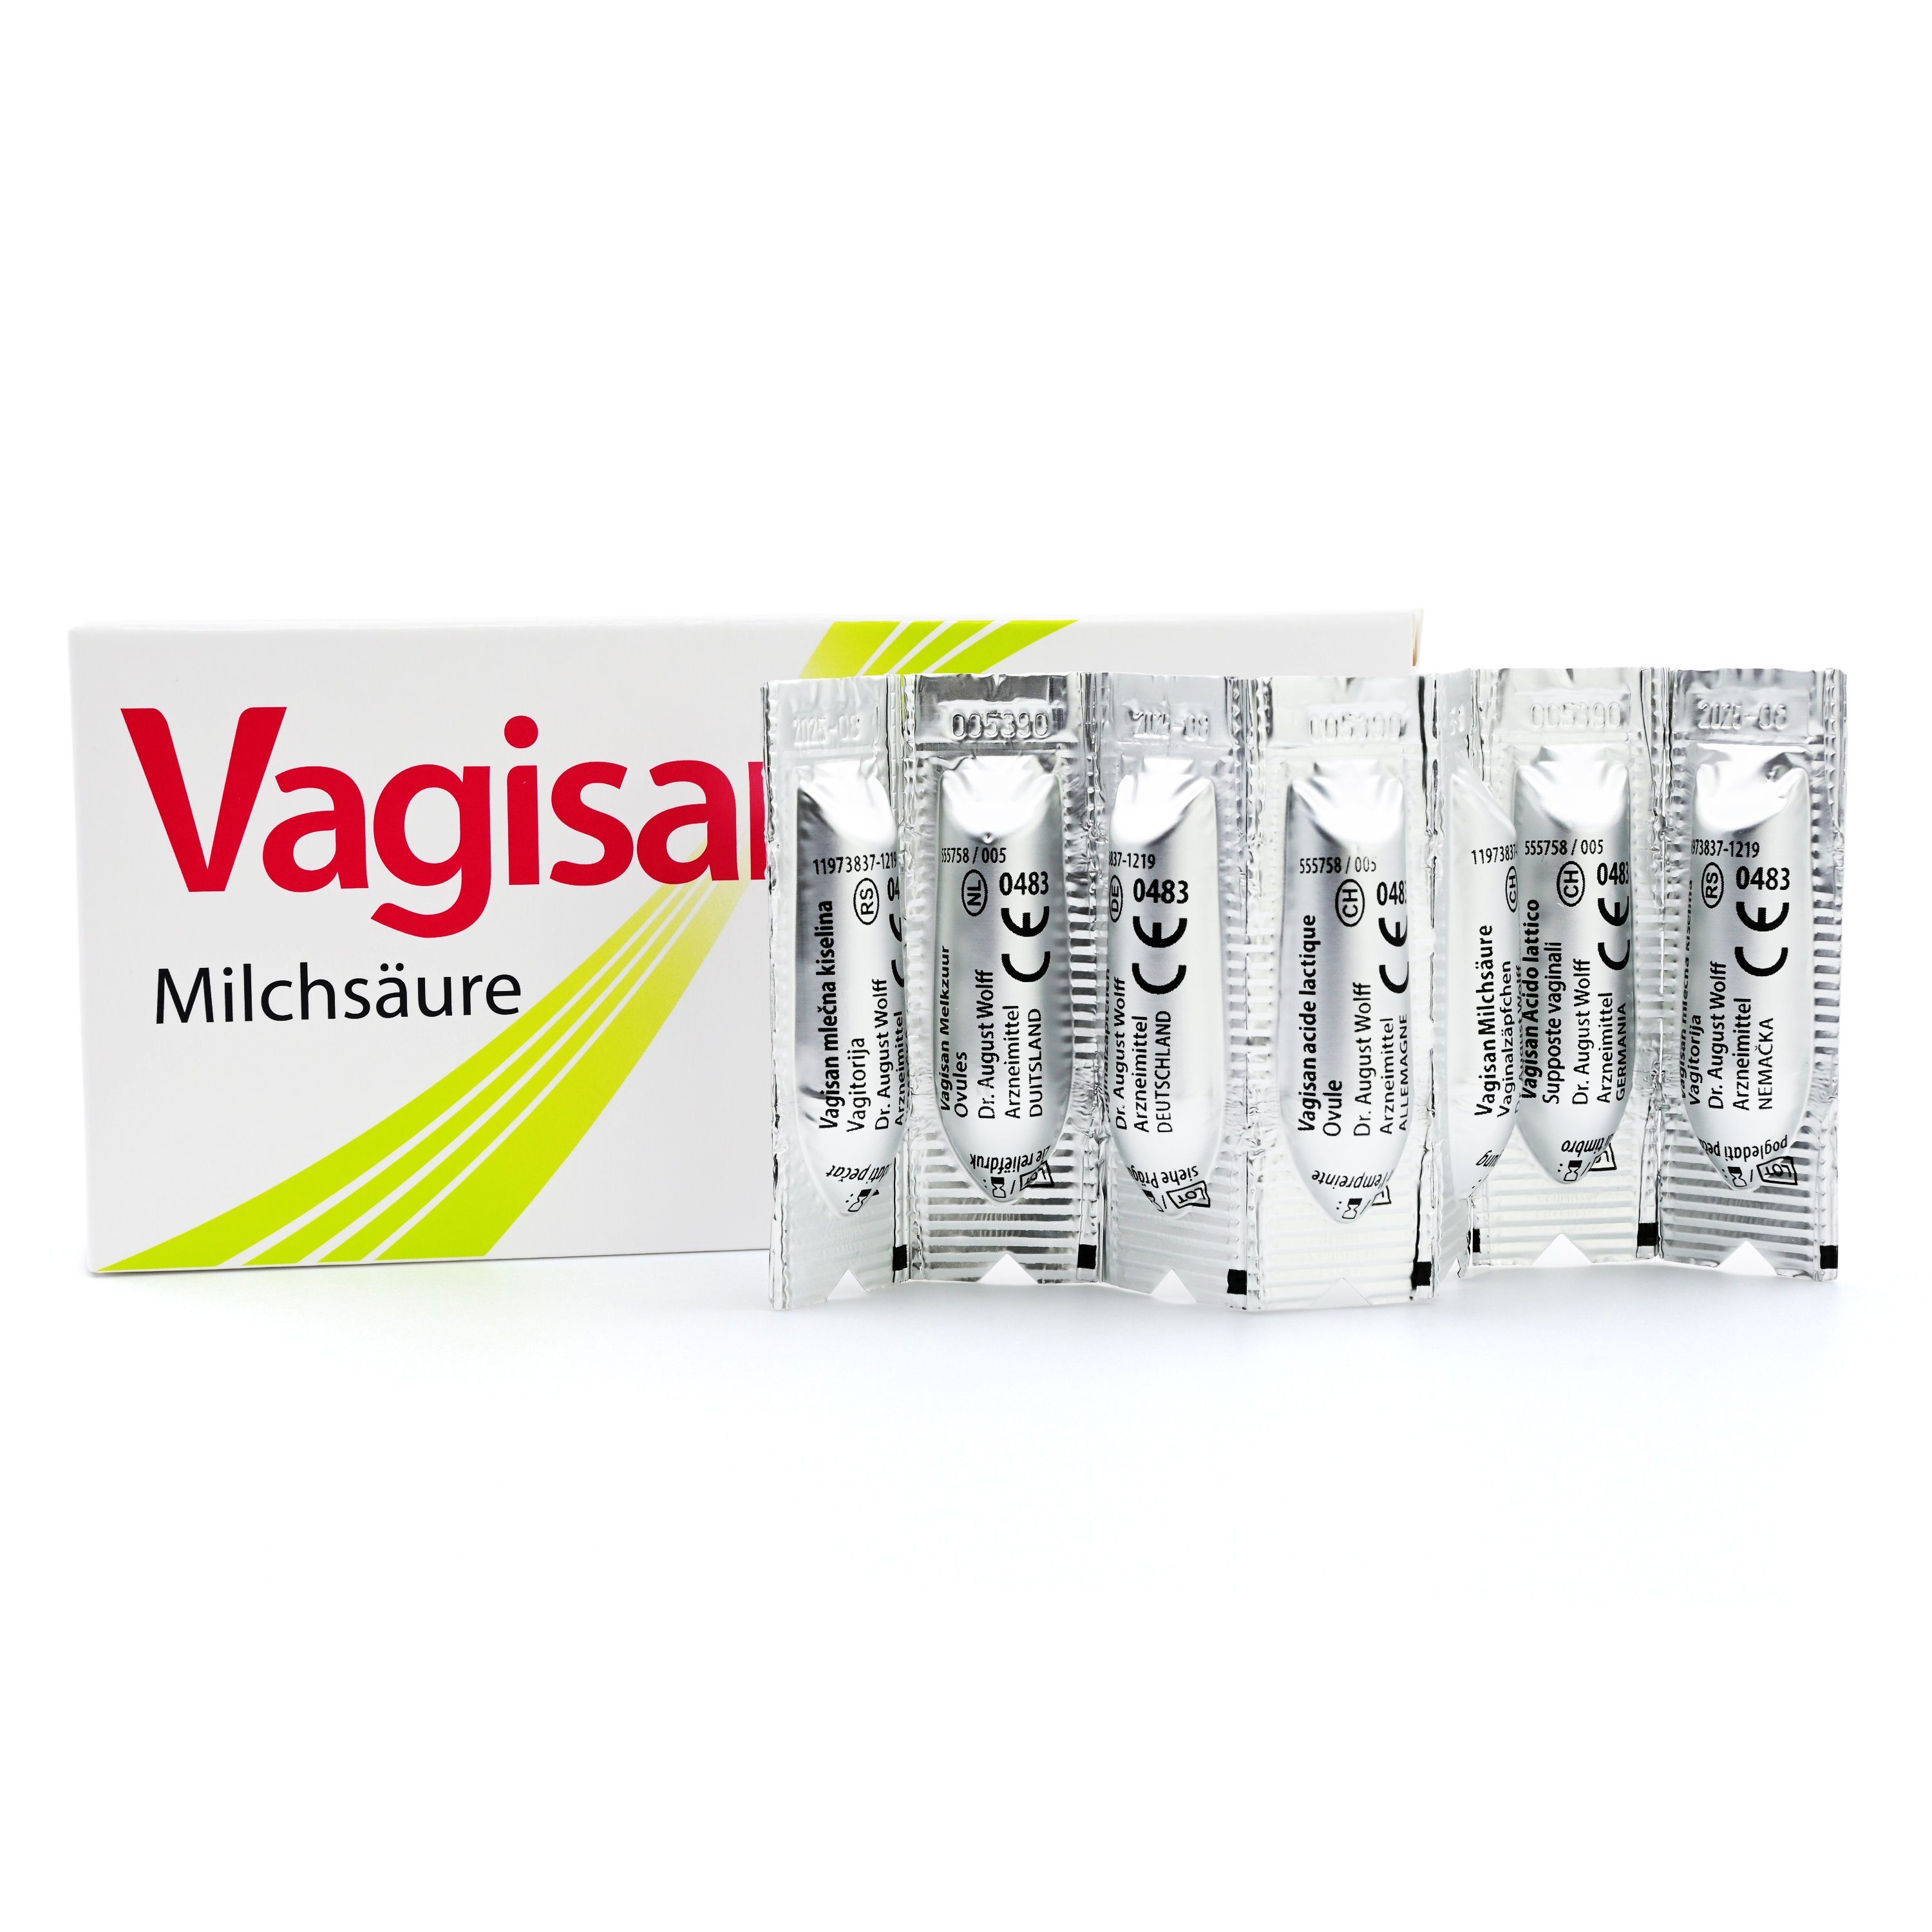 St VAGISAN Vaginalzäpfchen, Vagisan Milchsäure Intimpflege 7